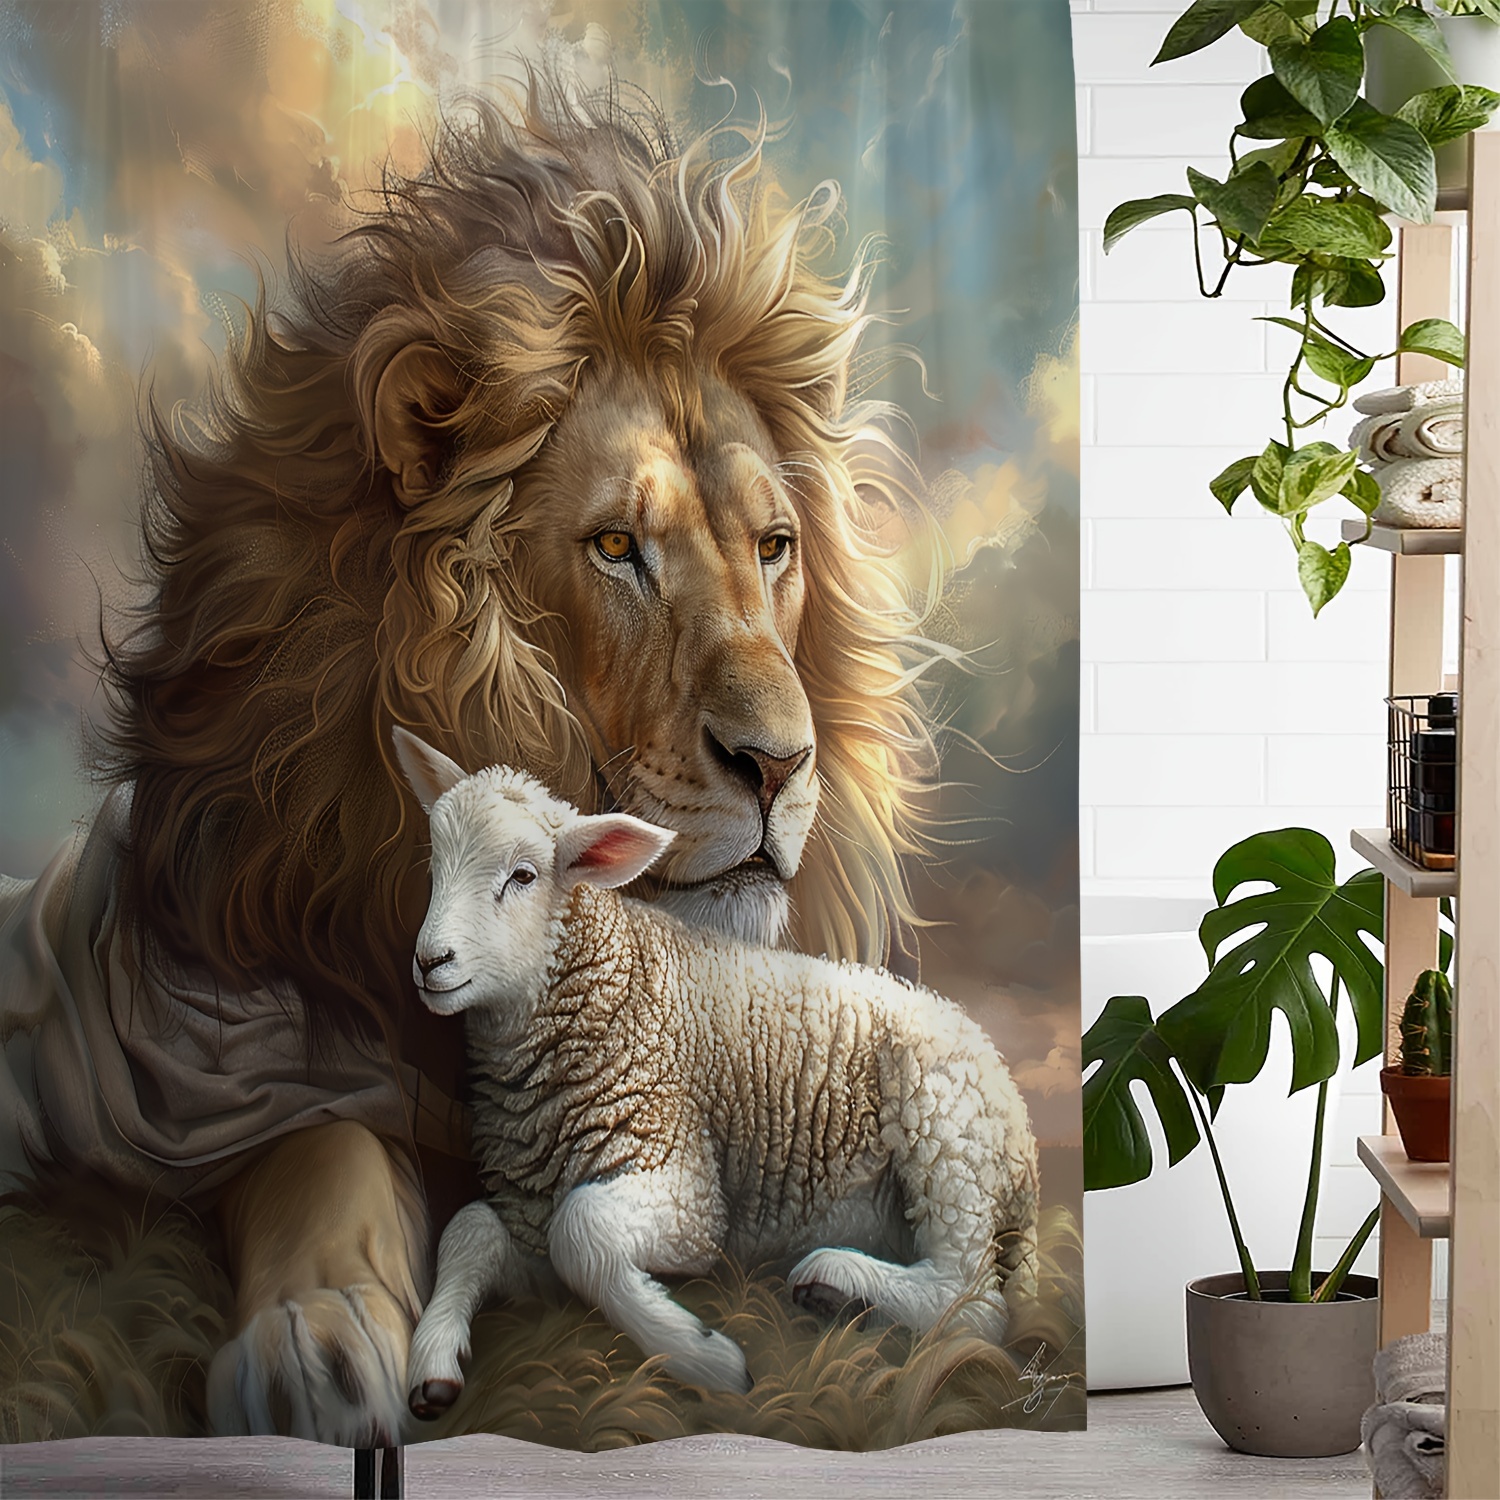 

Lion And Lamb Art Print Waterproof Shower Curtain With 12 Hooks - 72"x72" (183cmx183cm)